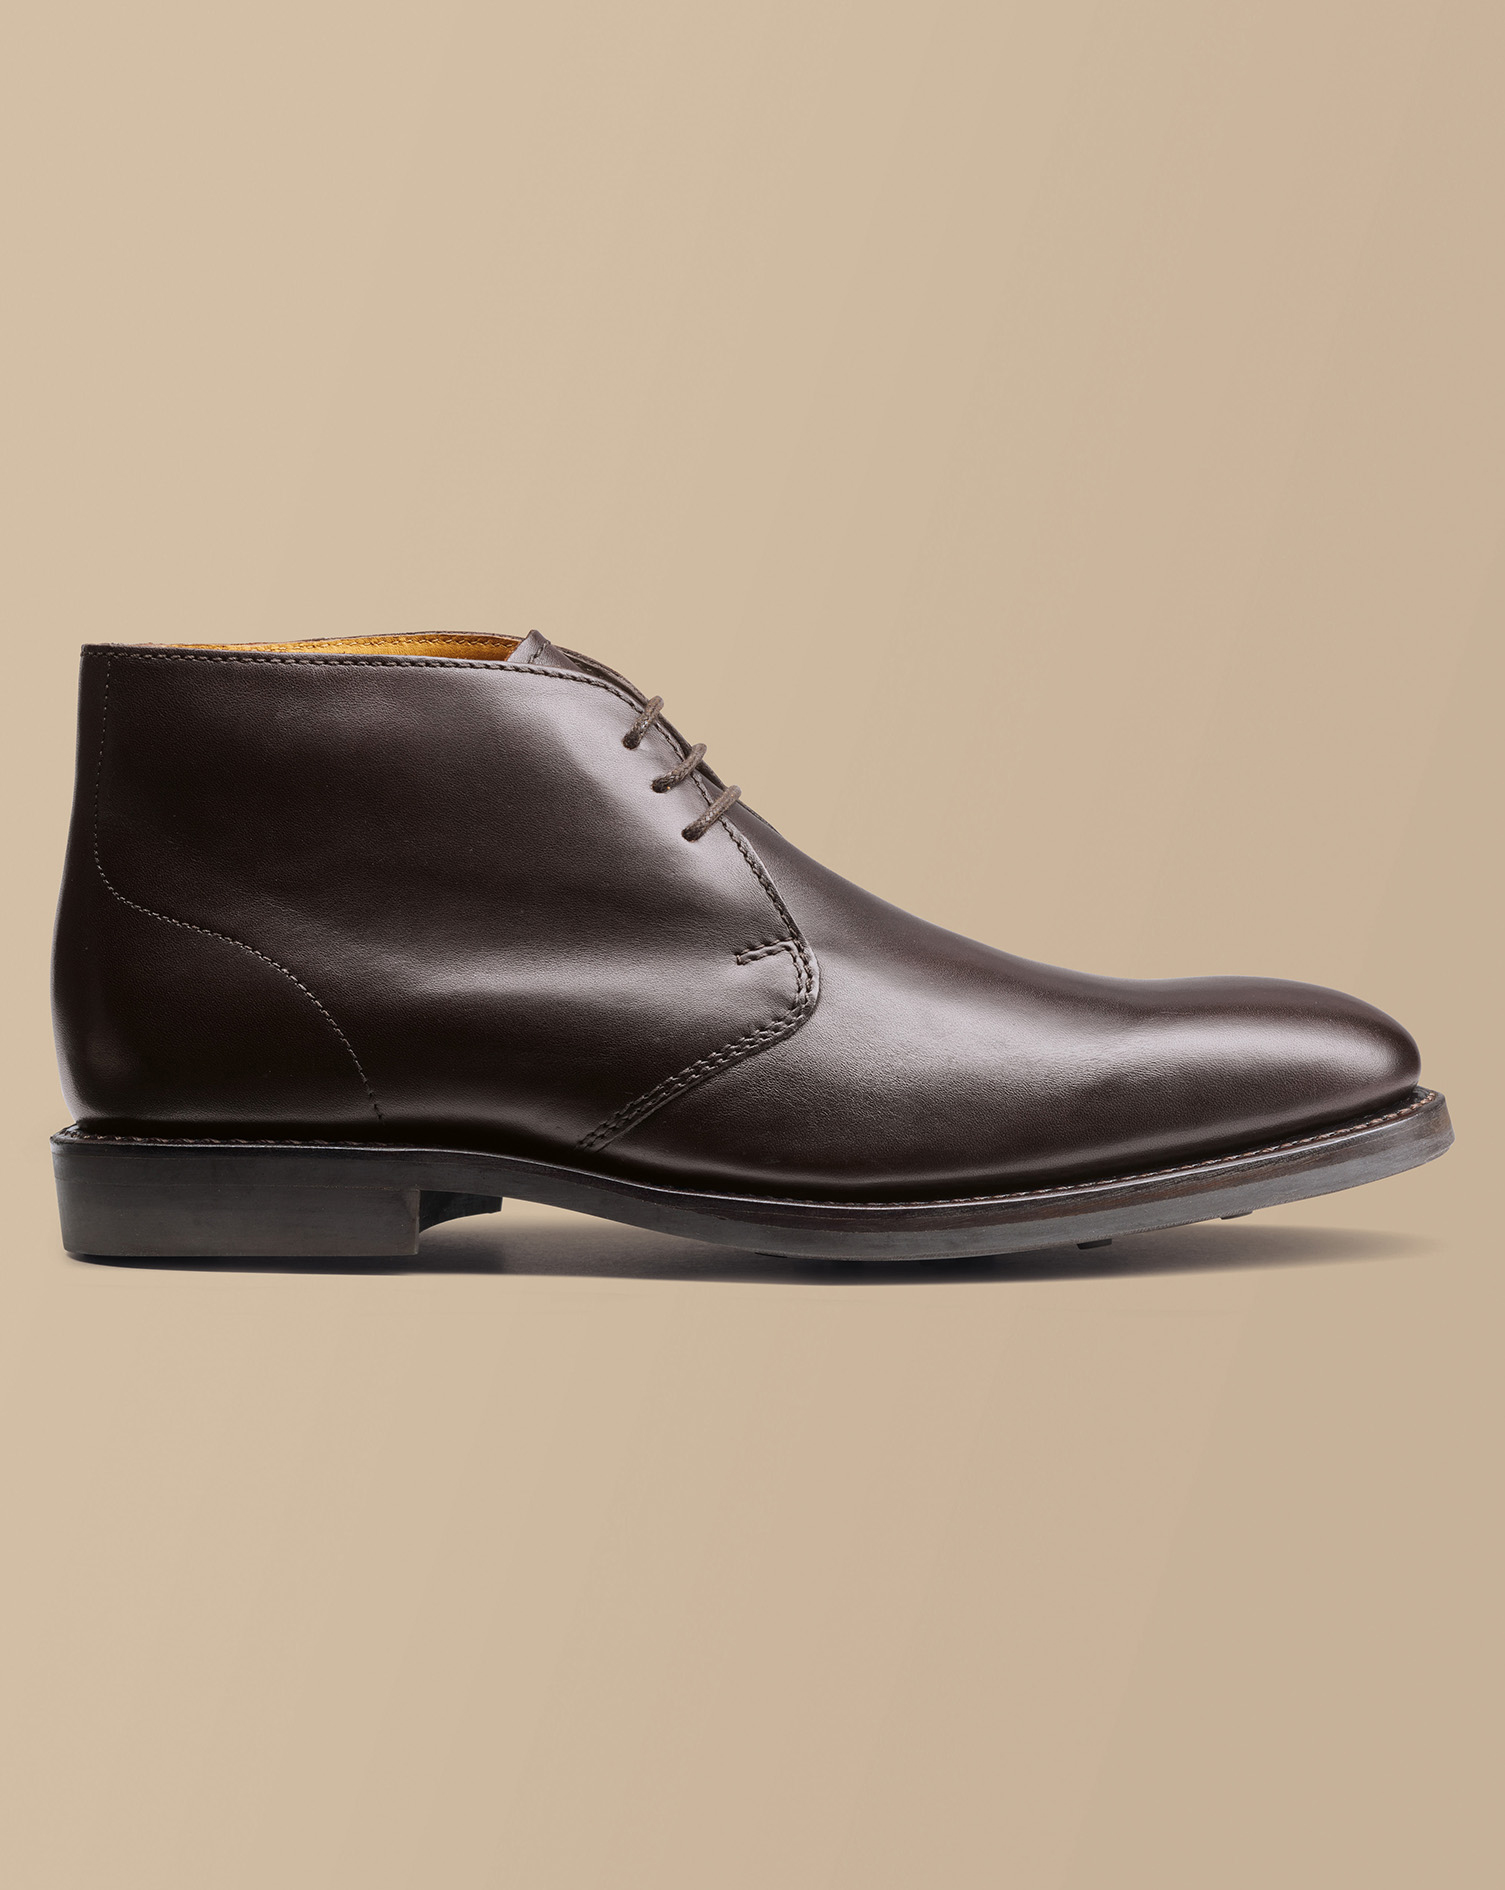 Men's Charles Tyrwhitt Chukka Boots - Dark Chocolate Brown Size 11 Leather
